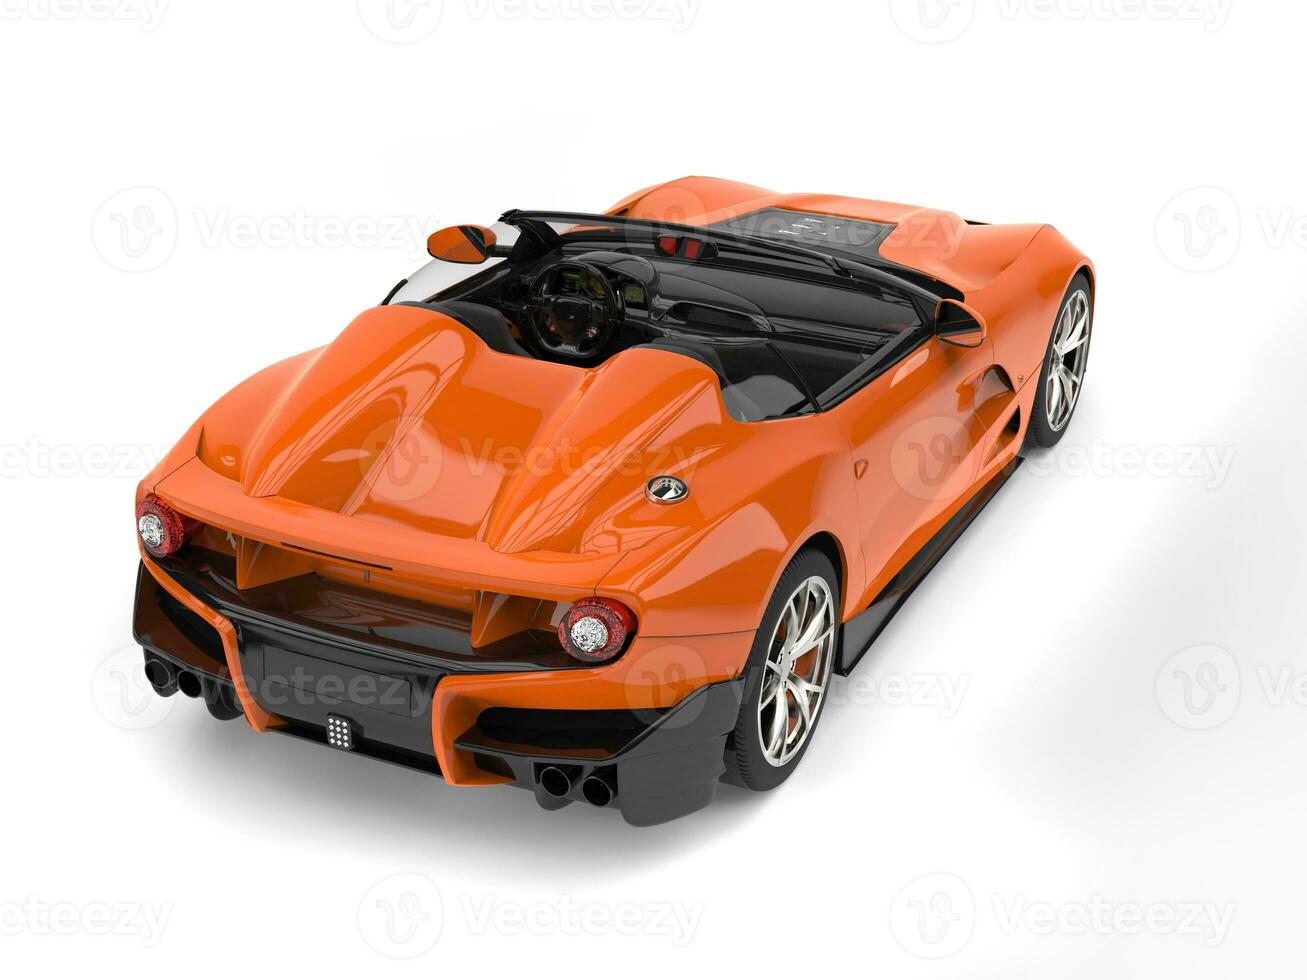 Fire orange modern convertible super sports car - back view photo